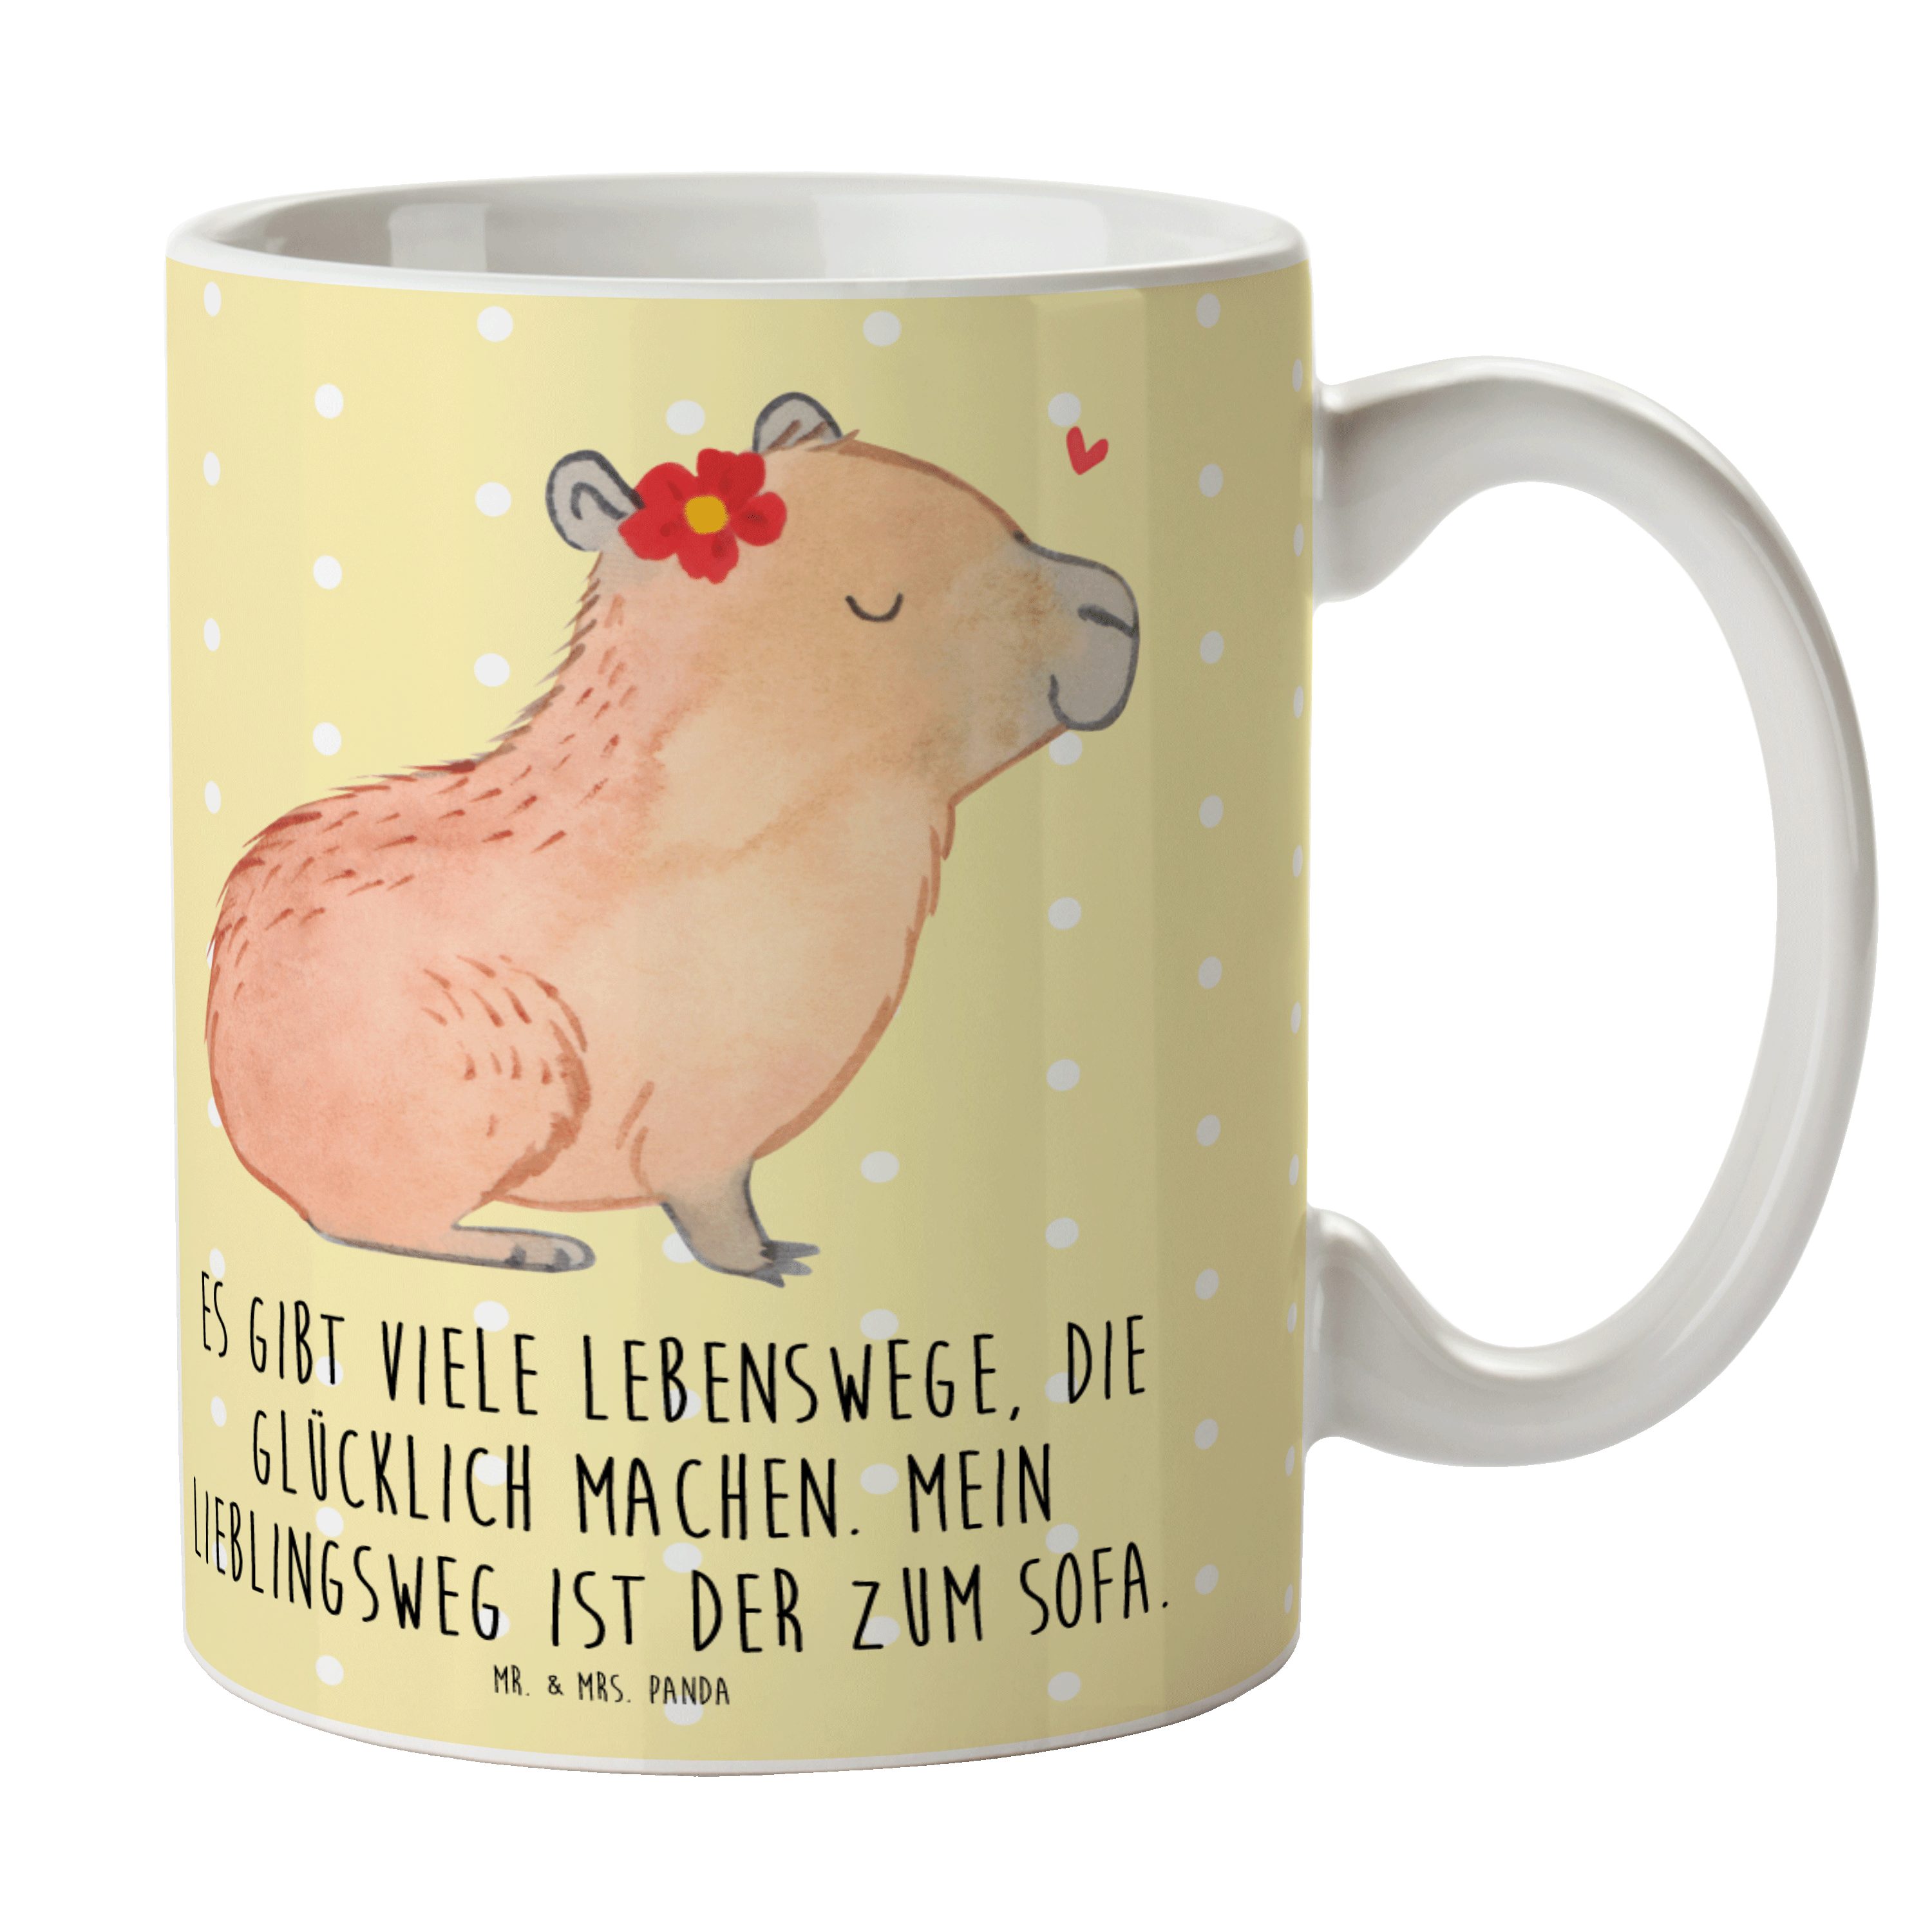 Mr. & Mrs. Panda Blume Gelb Tiere, Laune, Geschenk, Teetasse, Tasse Capybara - - Pastell Gute Keramik